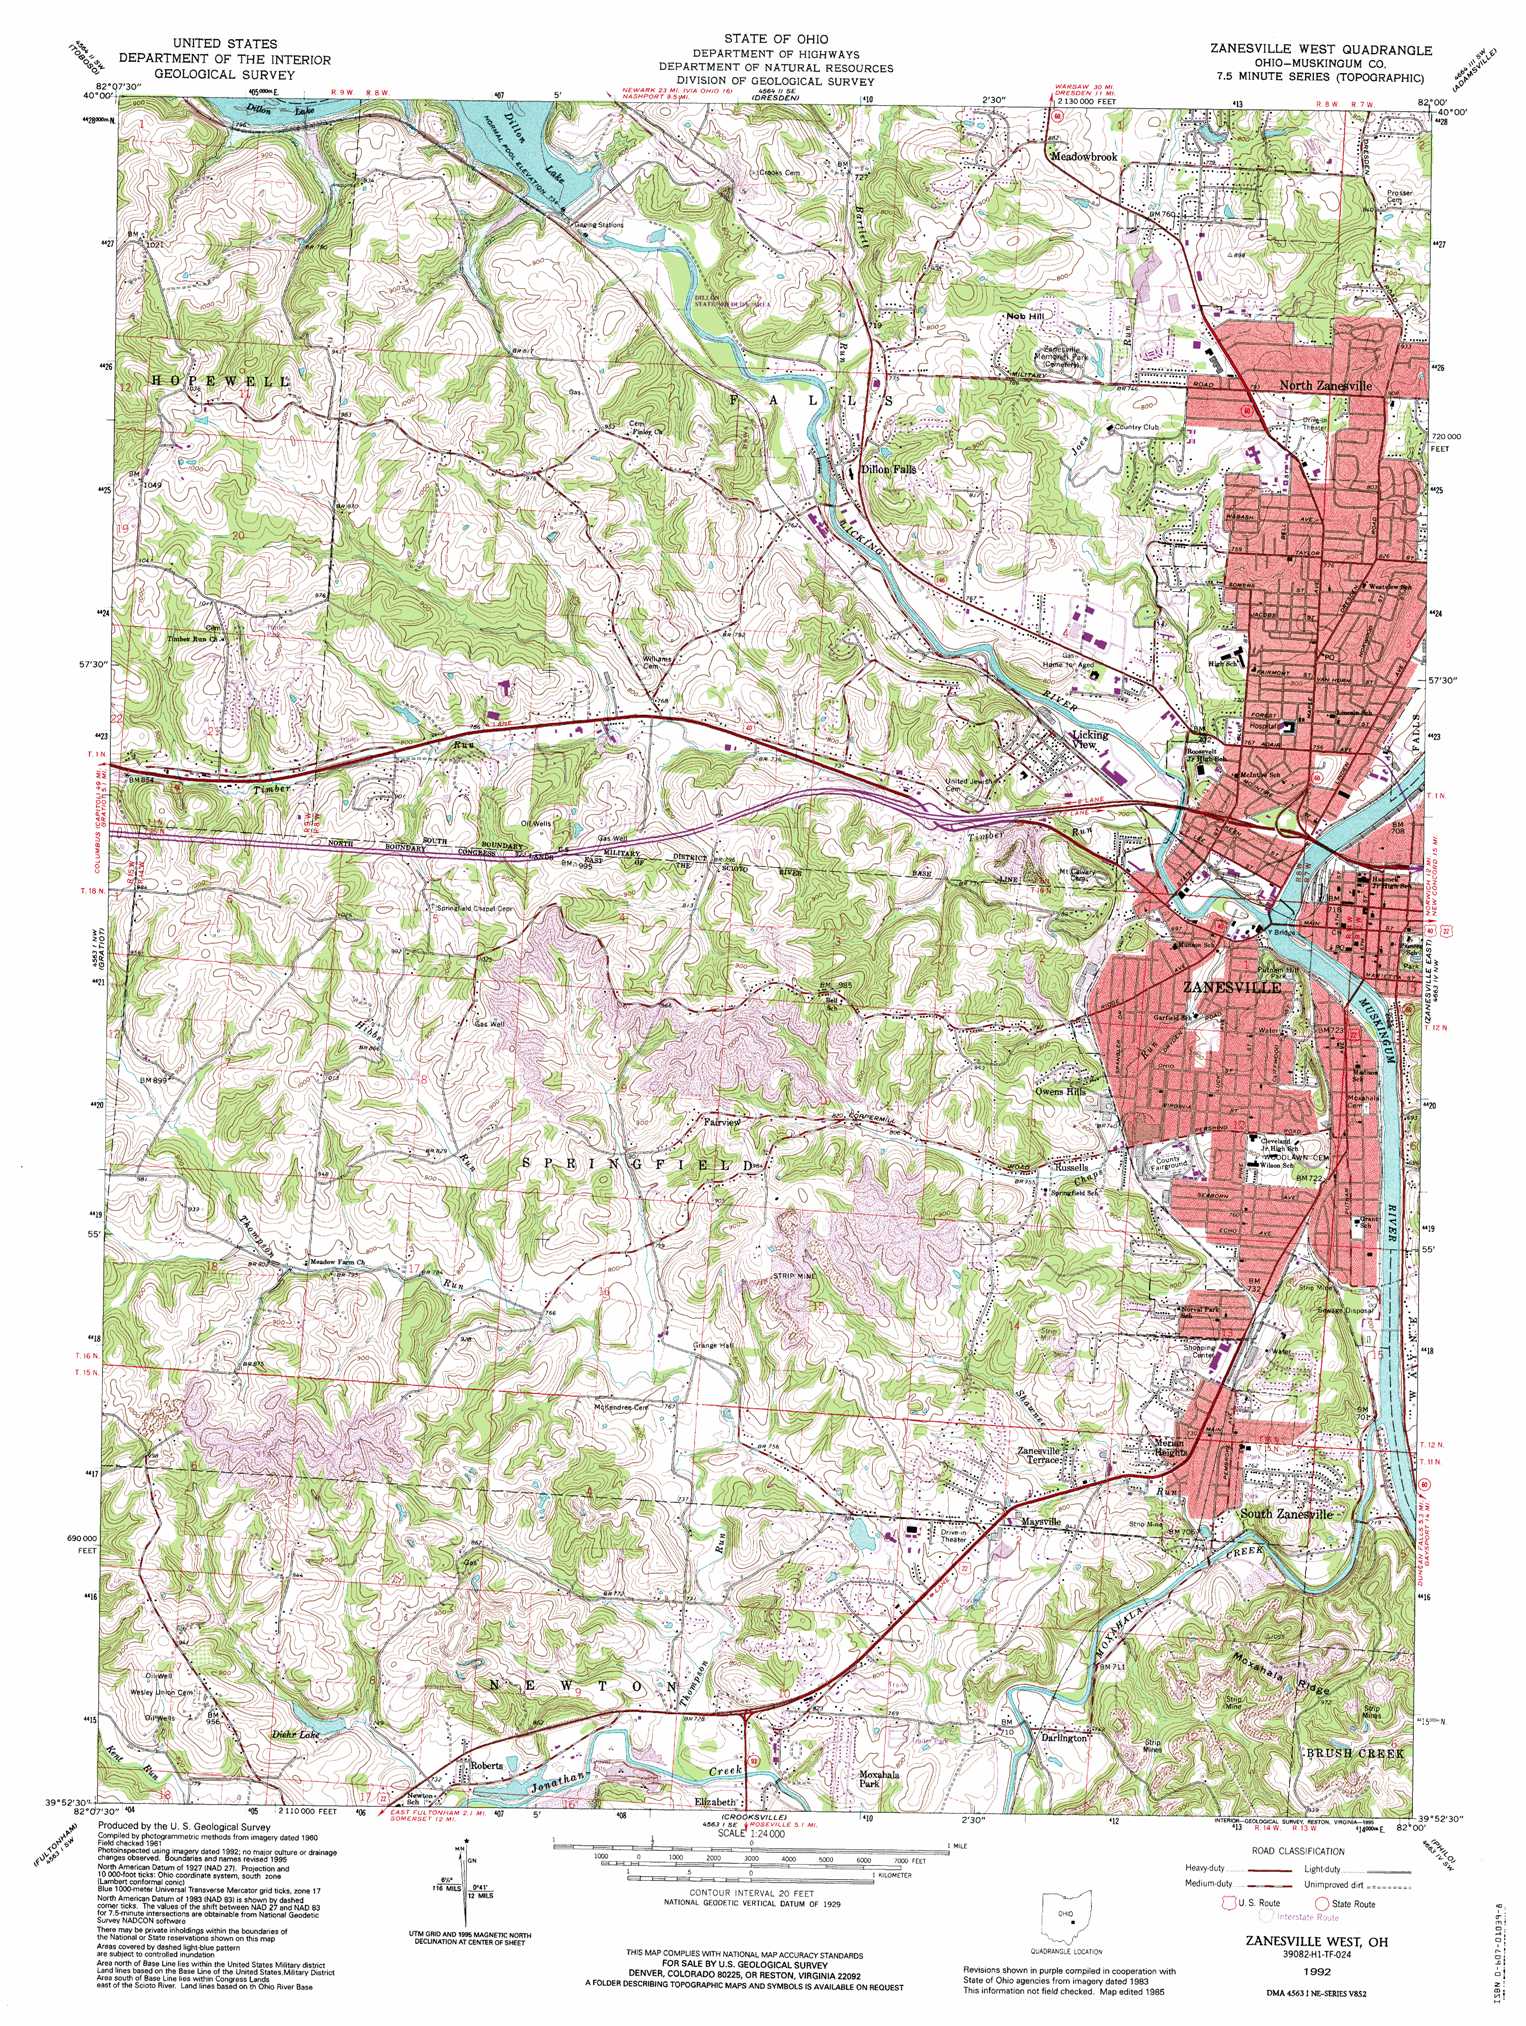 Zanesville West topographic map, OH - USGS Topo Quad 39082h1